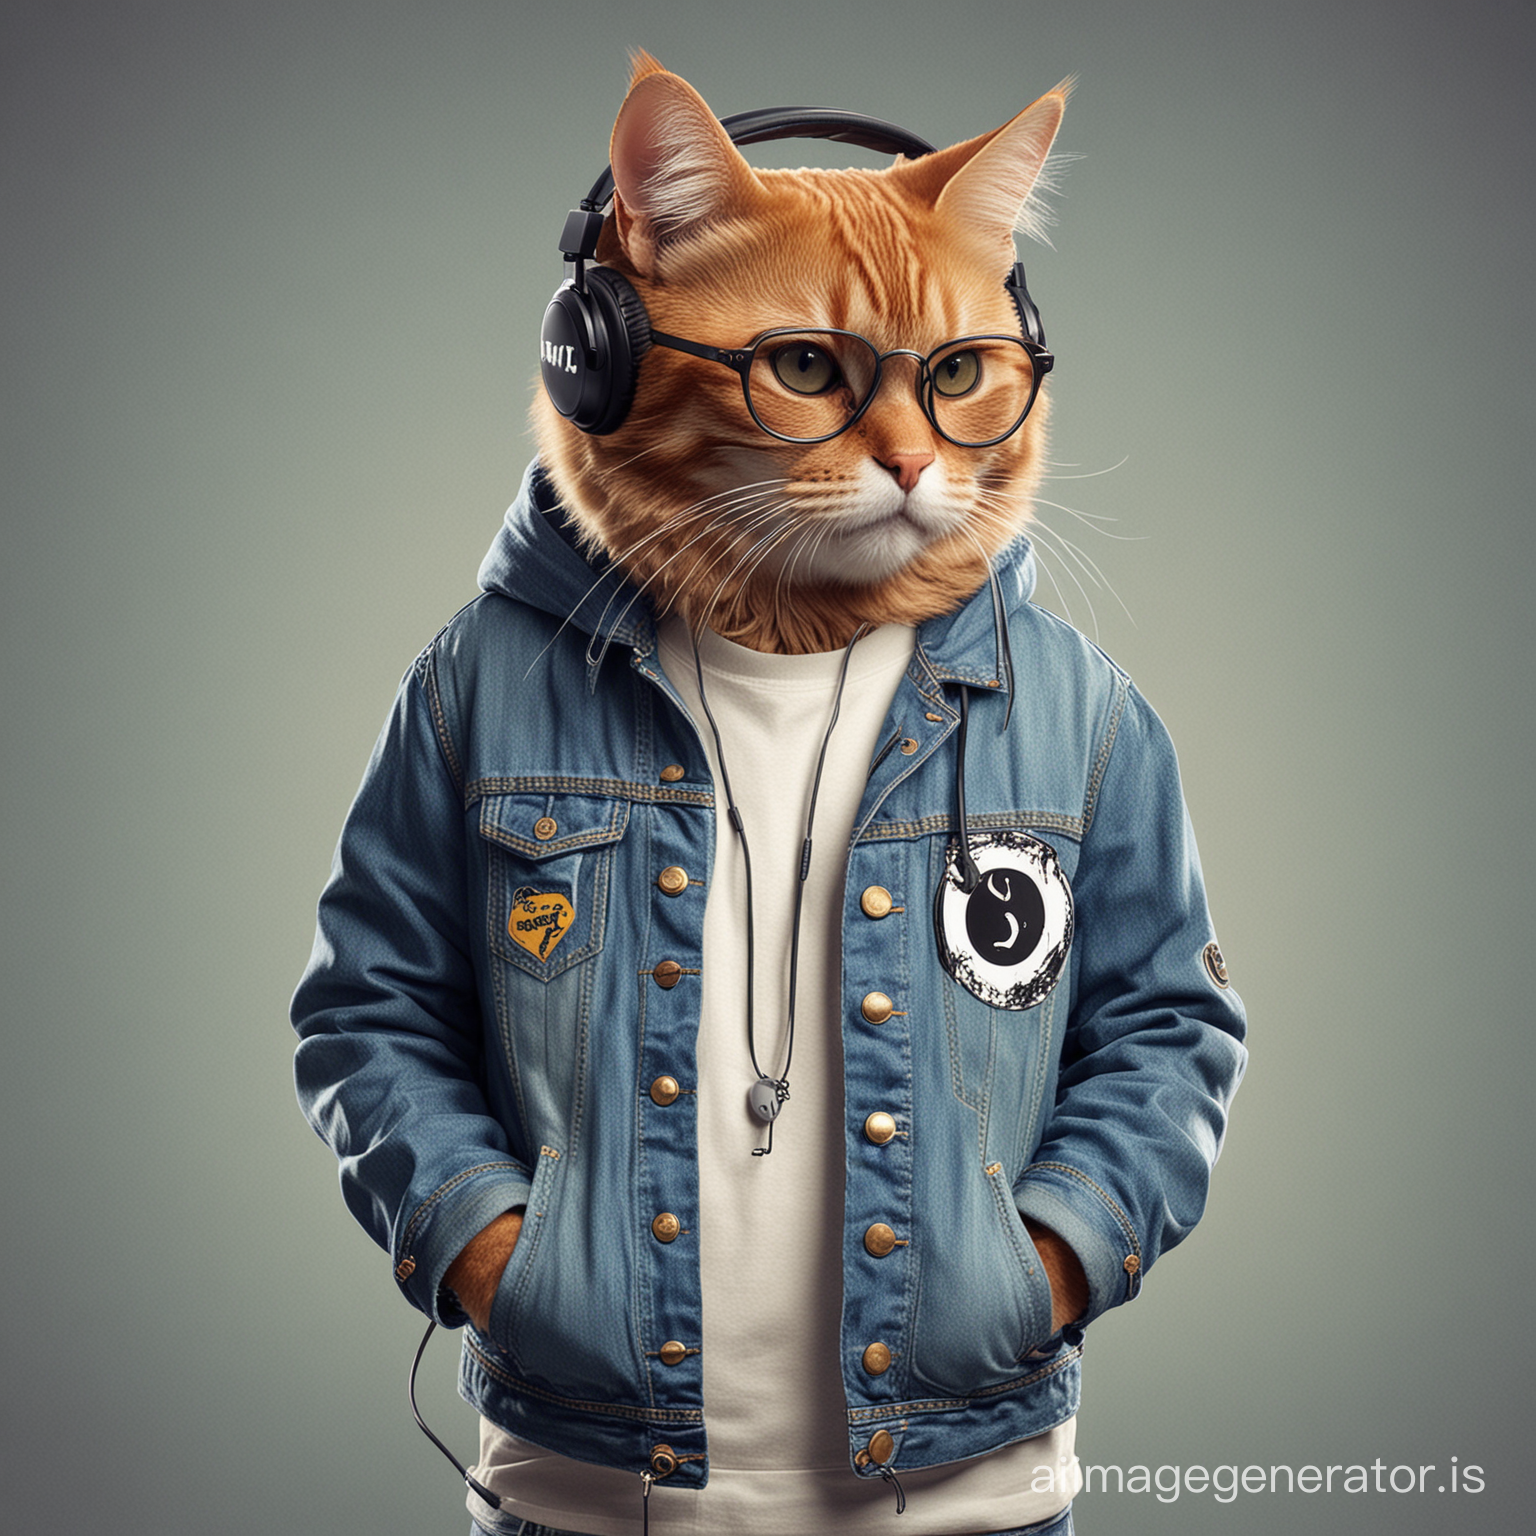 Cool-Cat-DJ-Jean-Jacket-headphone